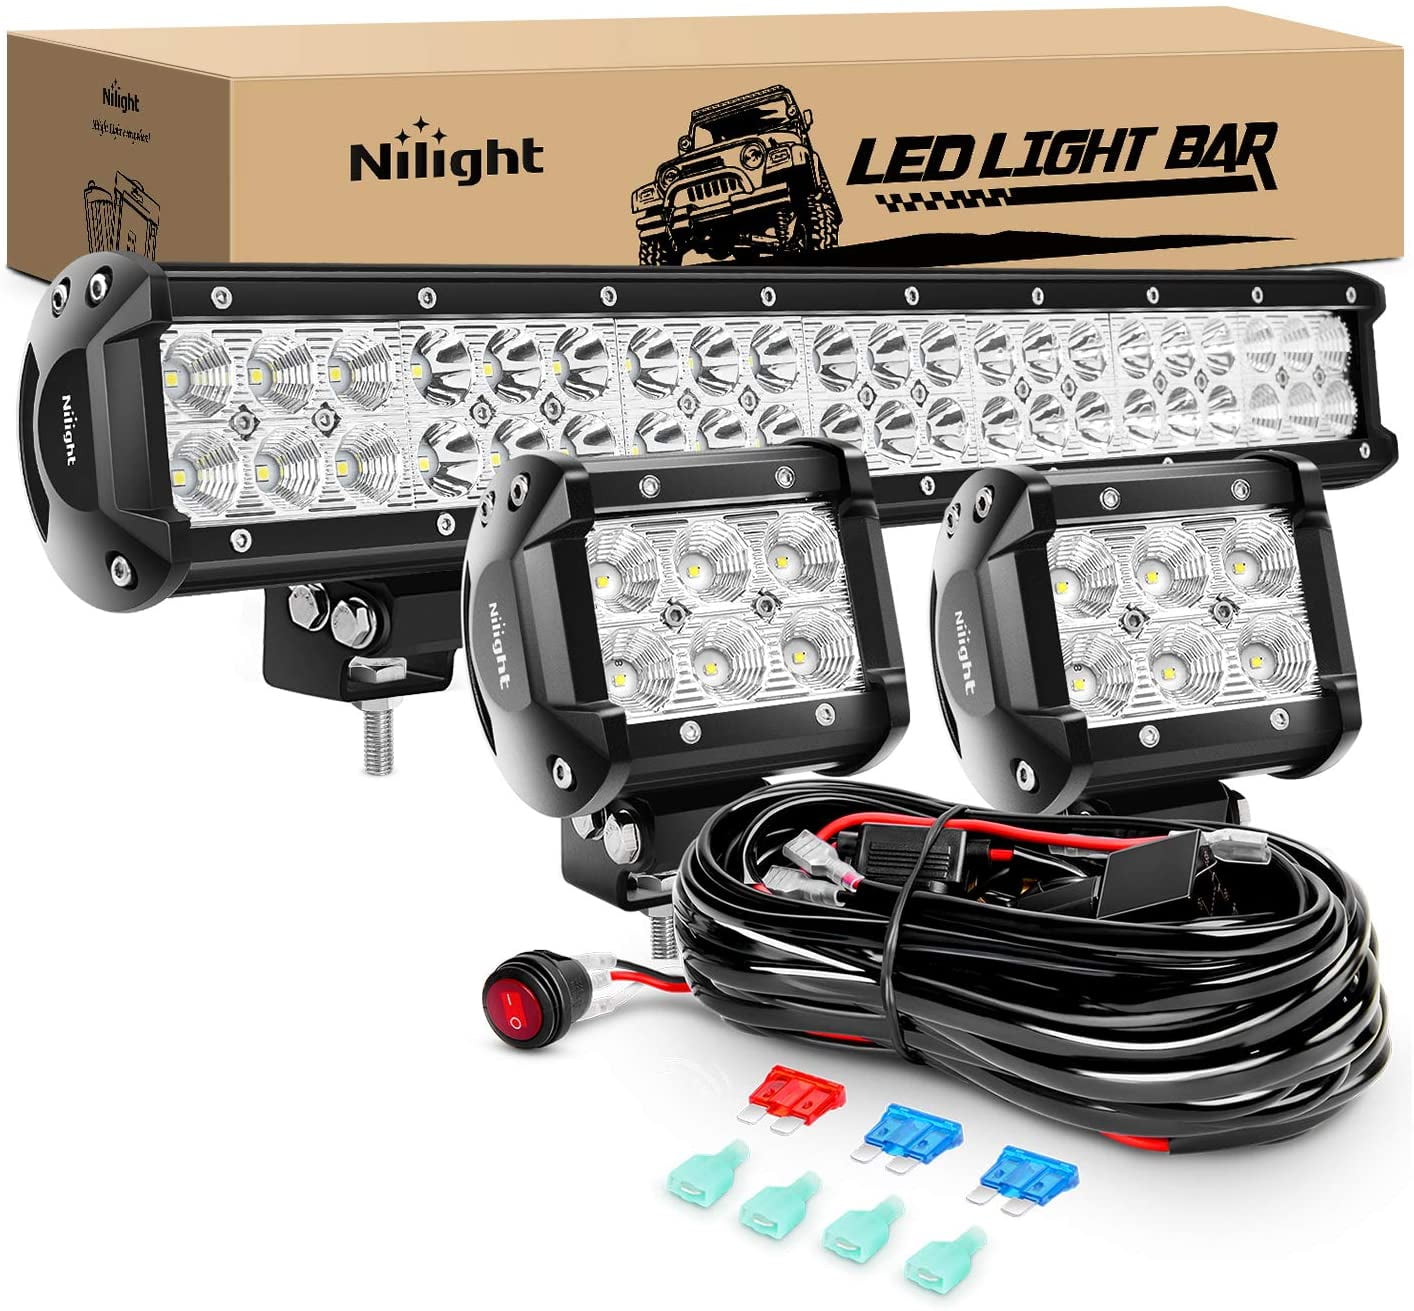 Nilight 20Inch 126W LED Light Bar Dual Row Spot Flood Combo + 2pcs